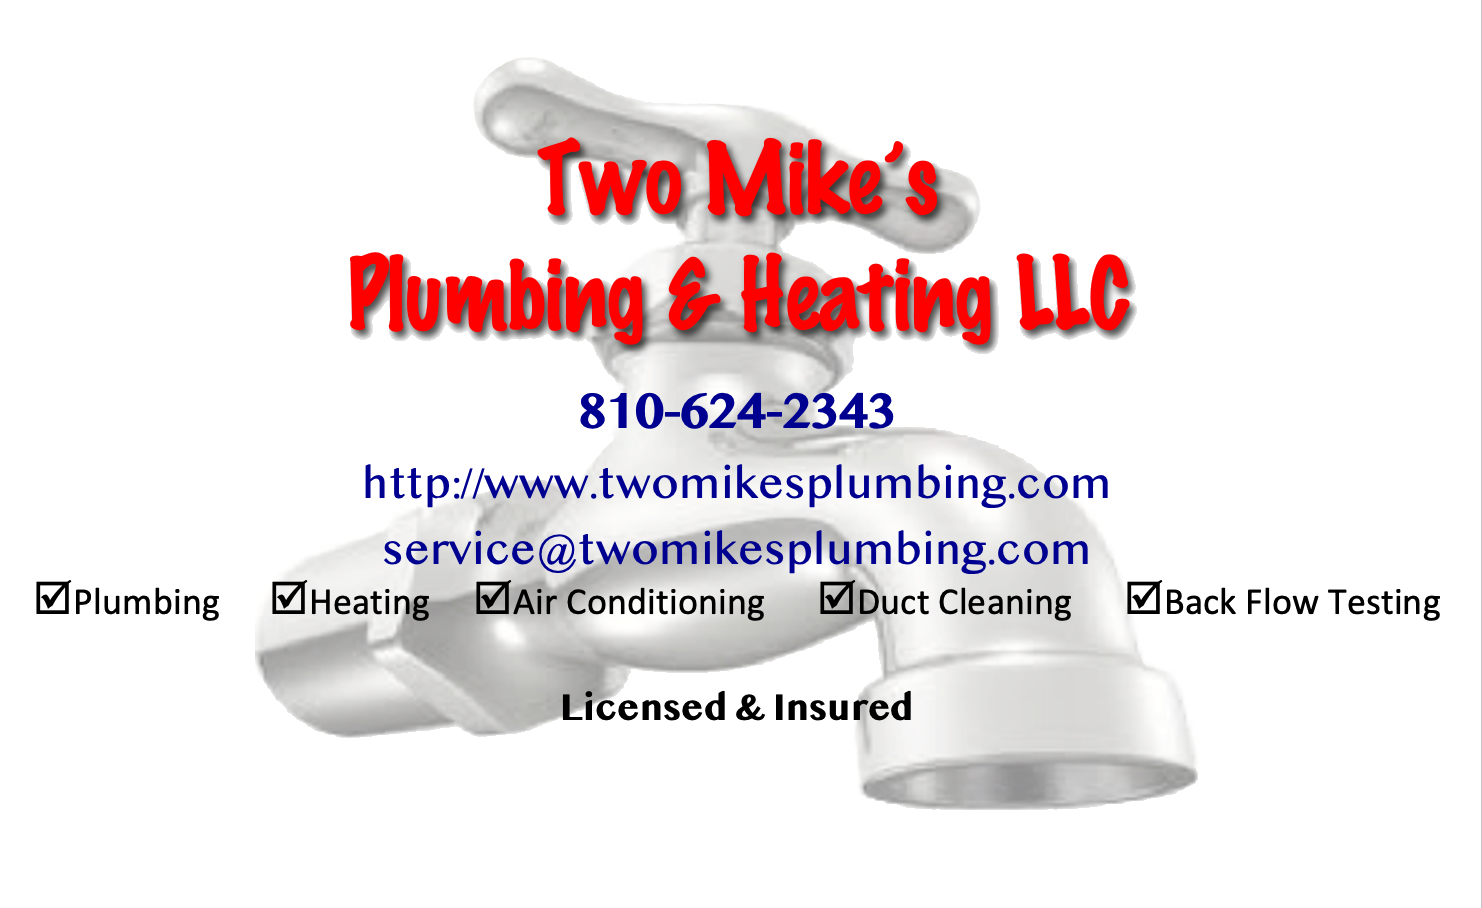 Two Mikes Plumbing & Heating LLC